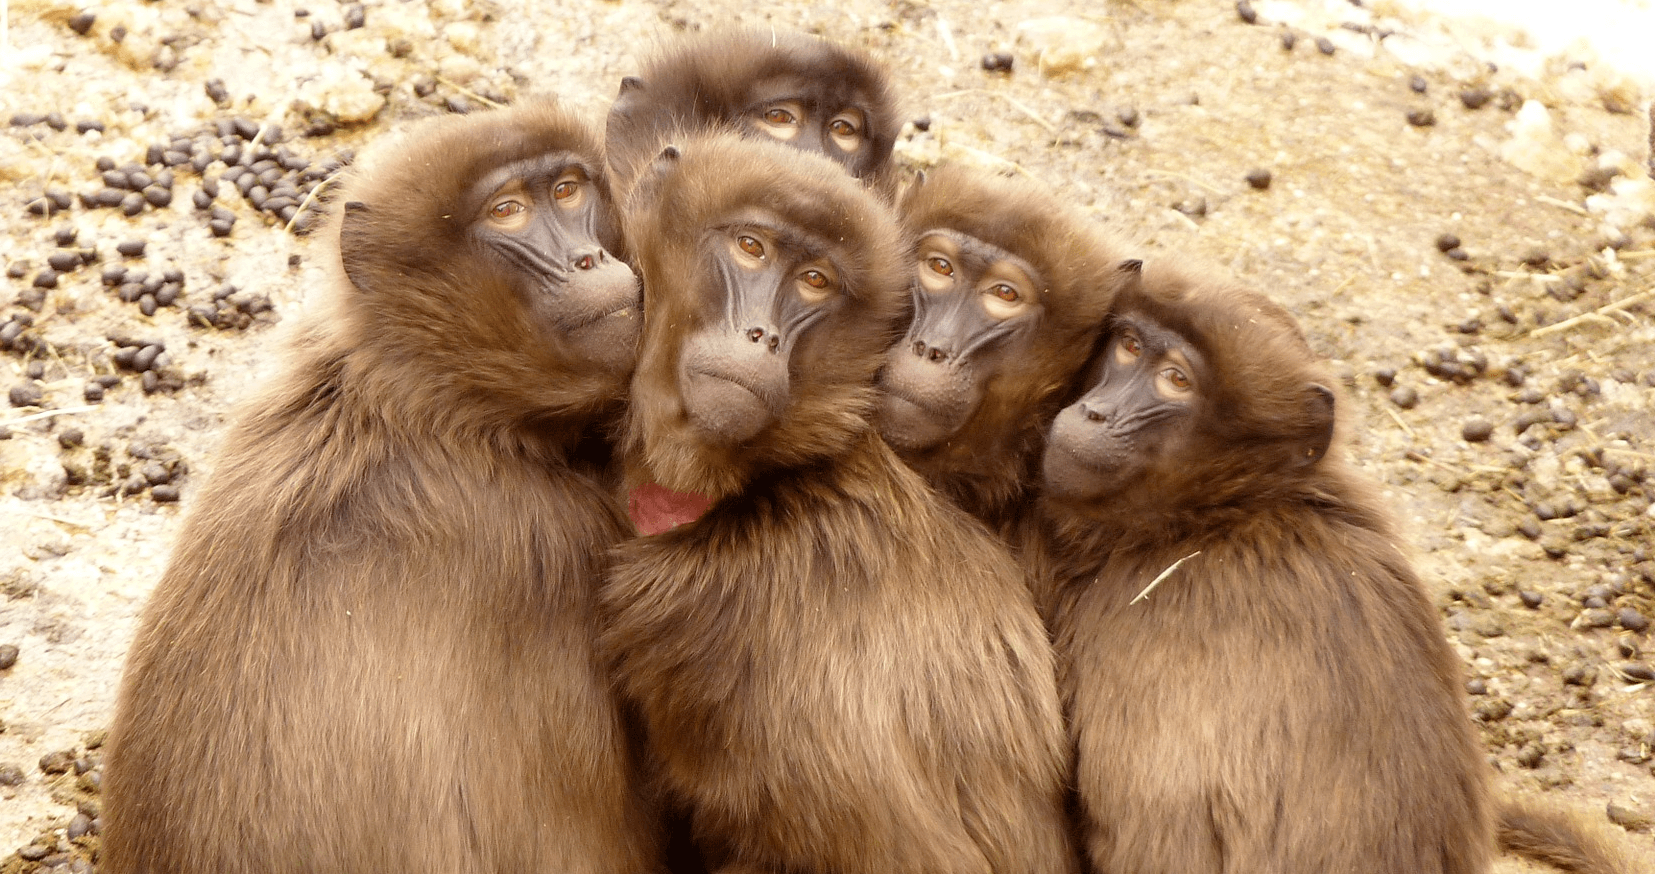 Beskrivning för "Is your Organization Like a Group of Monkeys?"